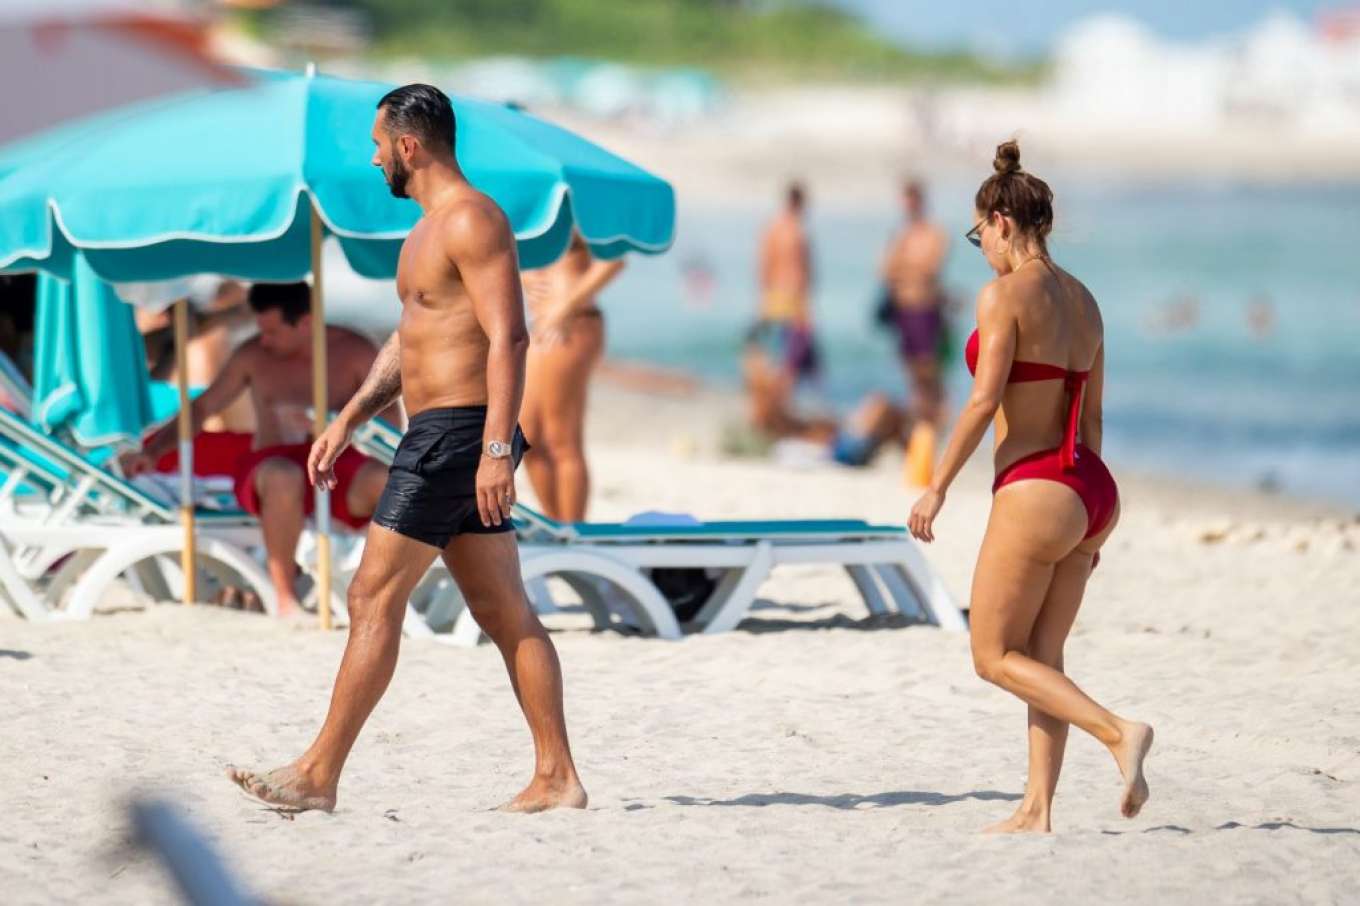 Sara Corrales in Red Bikini on the beach beach day in Miami. 